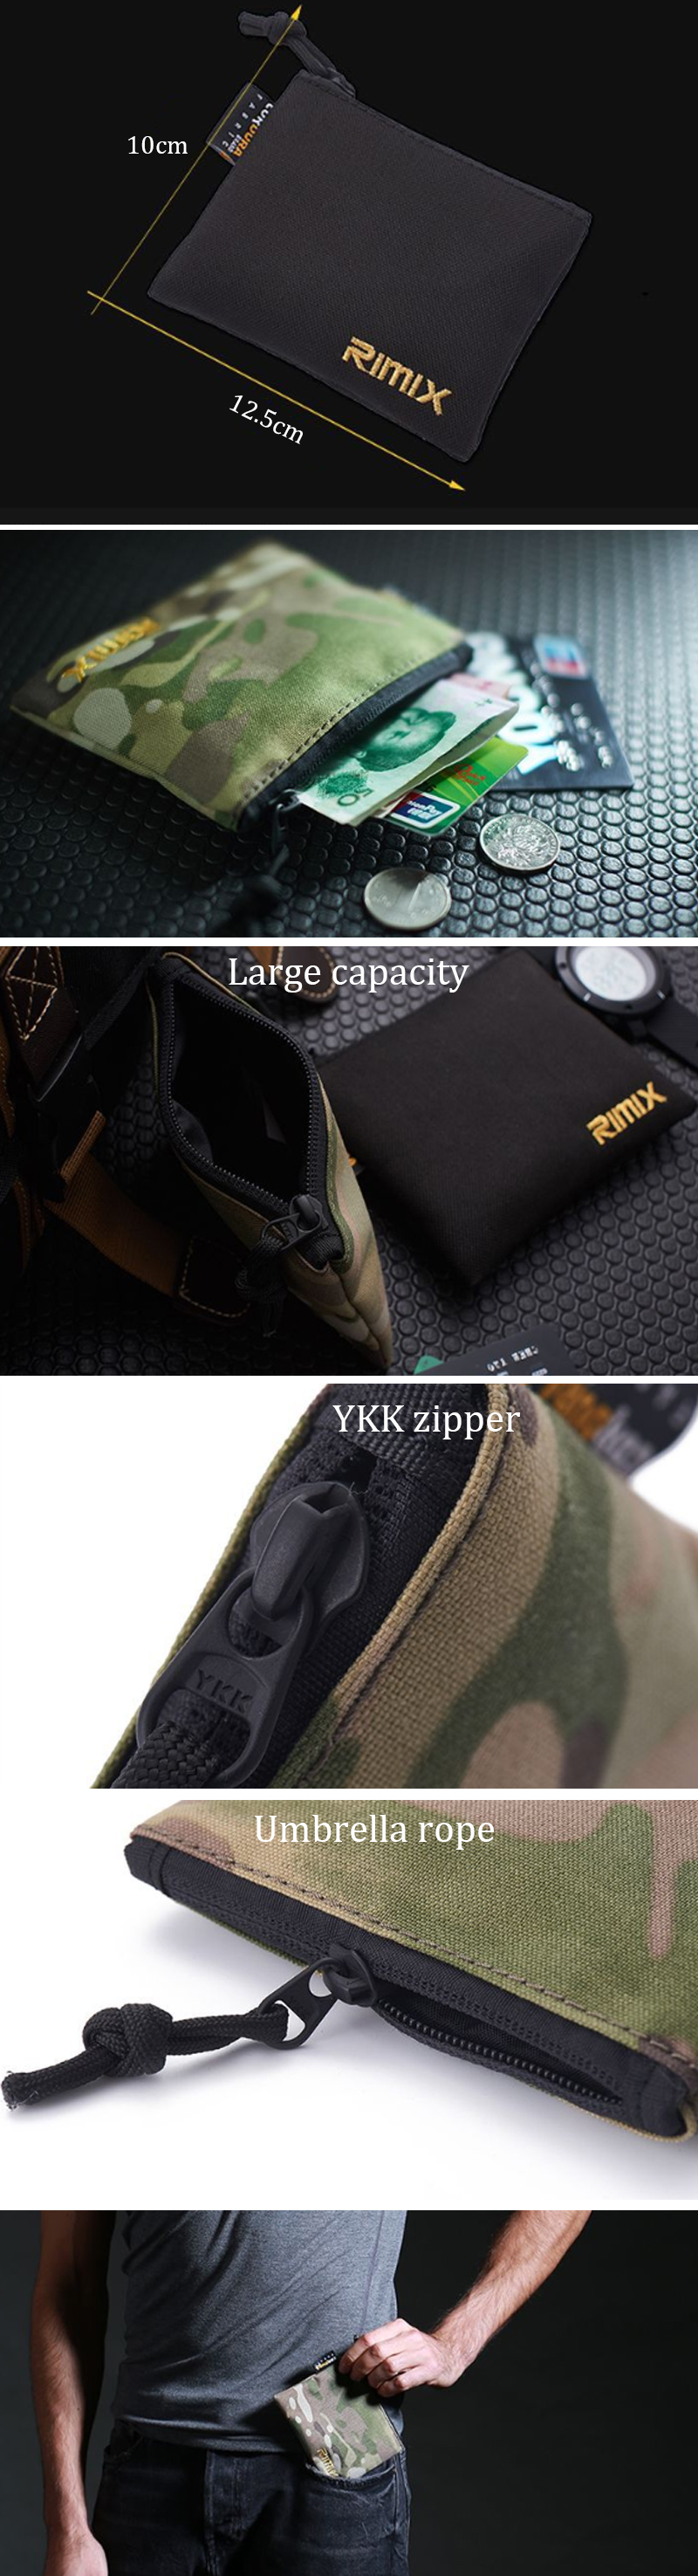 IPReereg-Outdoor-Tactical-EDC-Wallet-Men-Waterproof-1060D-Nylon-Card-Coin-Sport-Bags-Portable-Storag-1391718-1